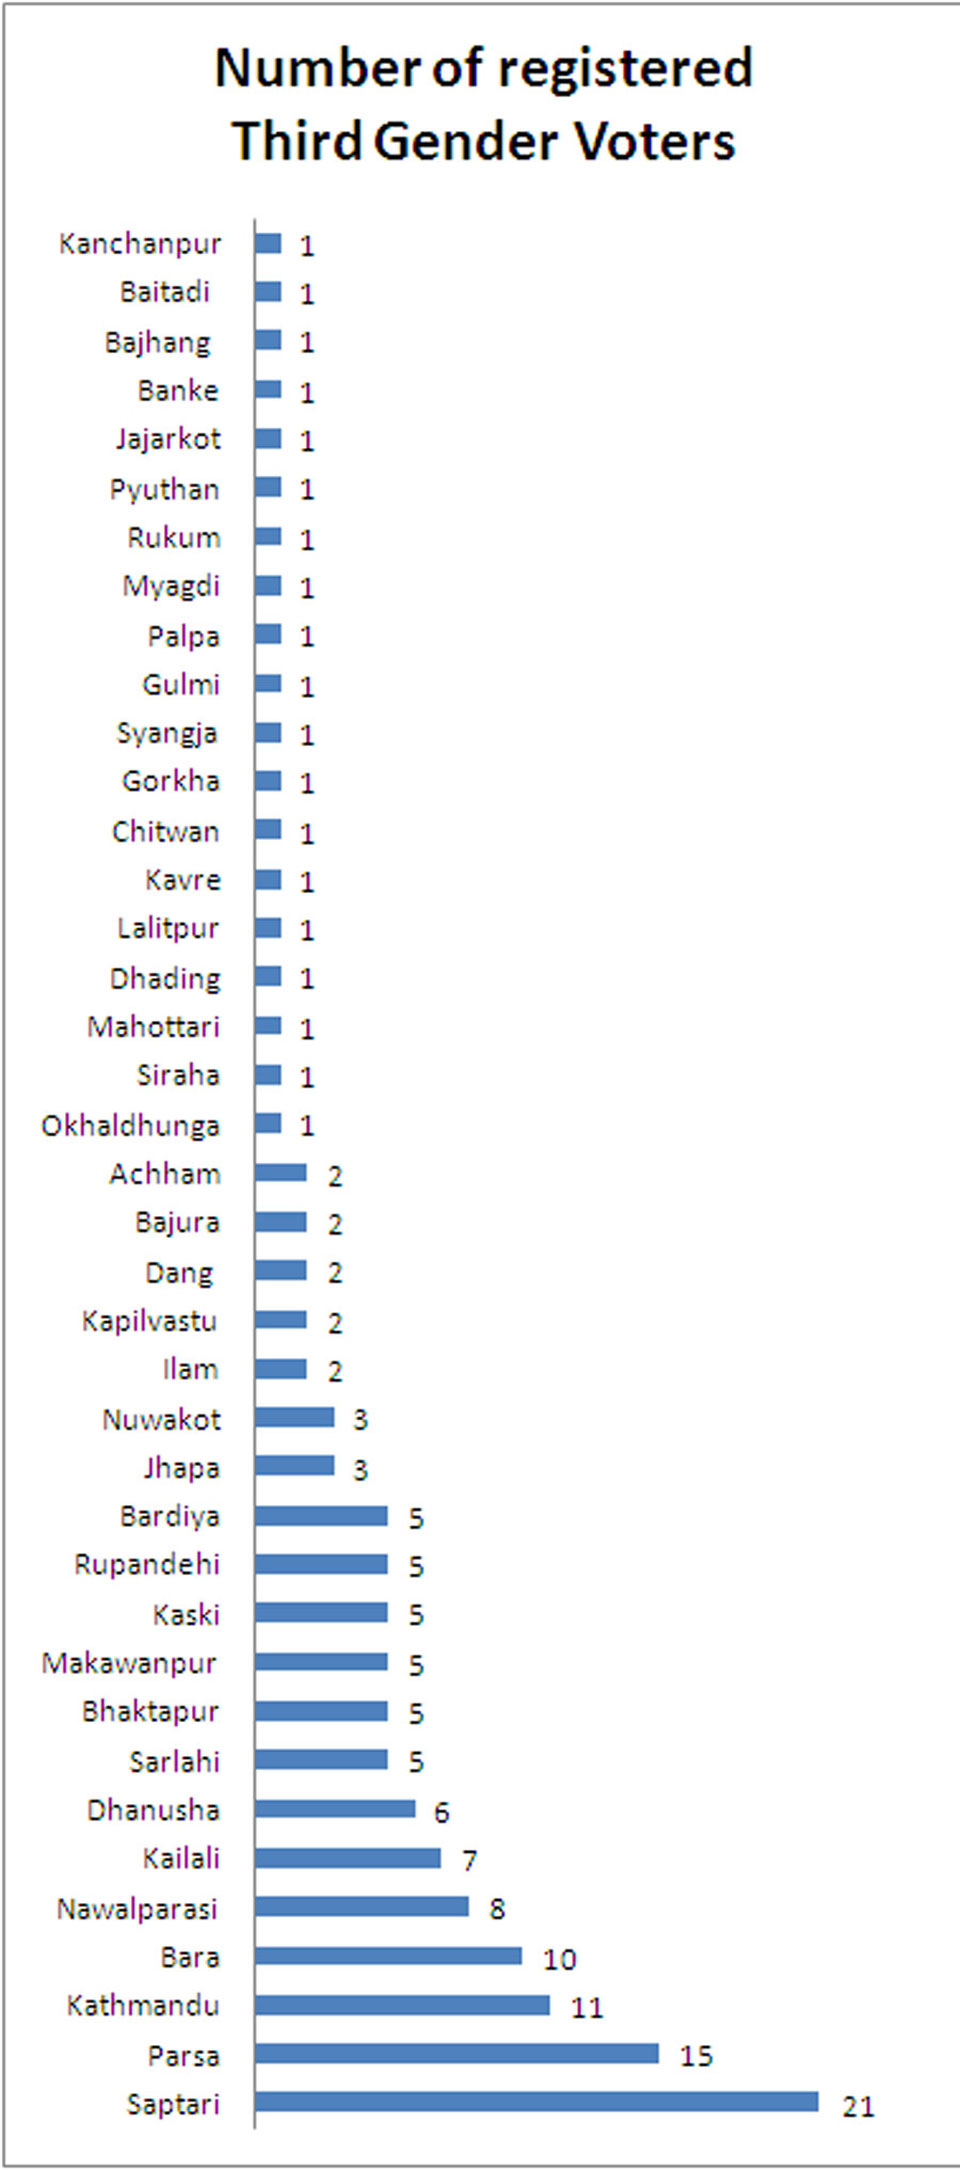 Third-gender voters in 39 districts, 21 in Saptari